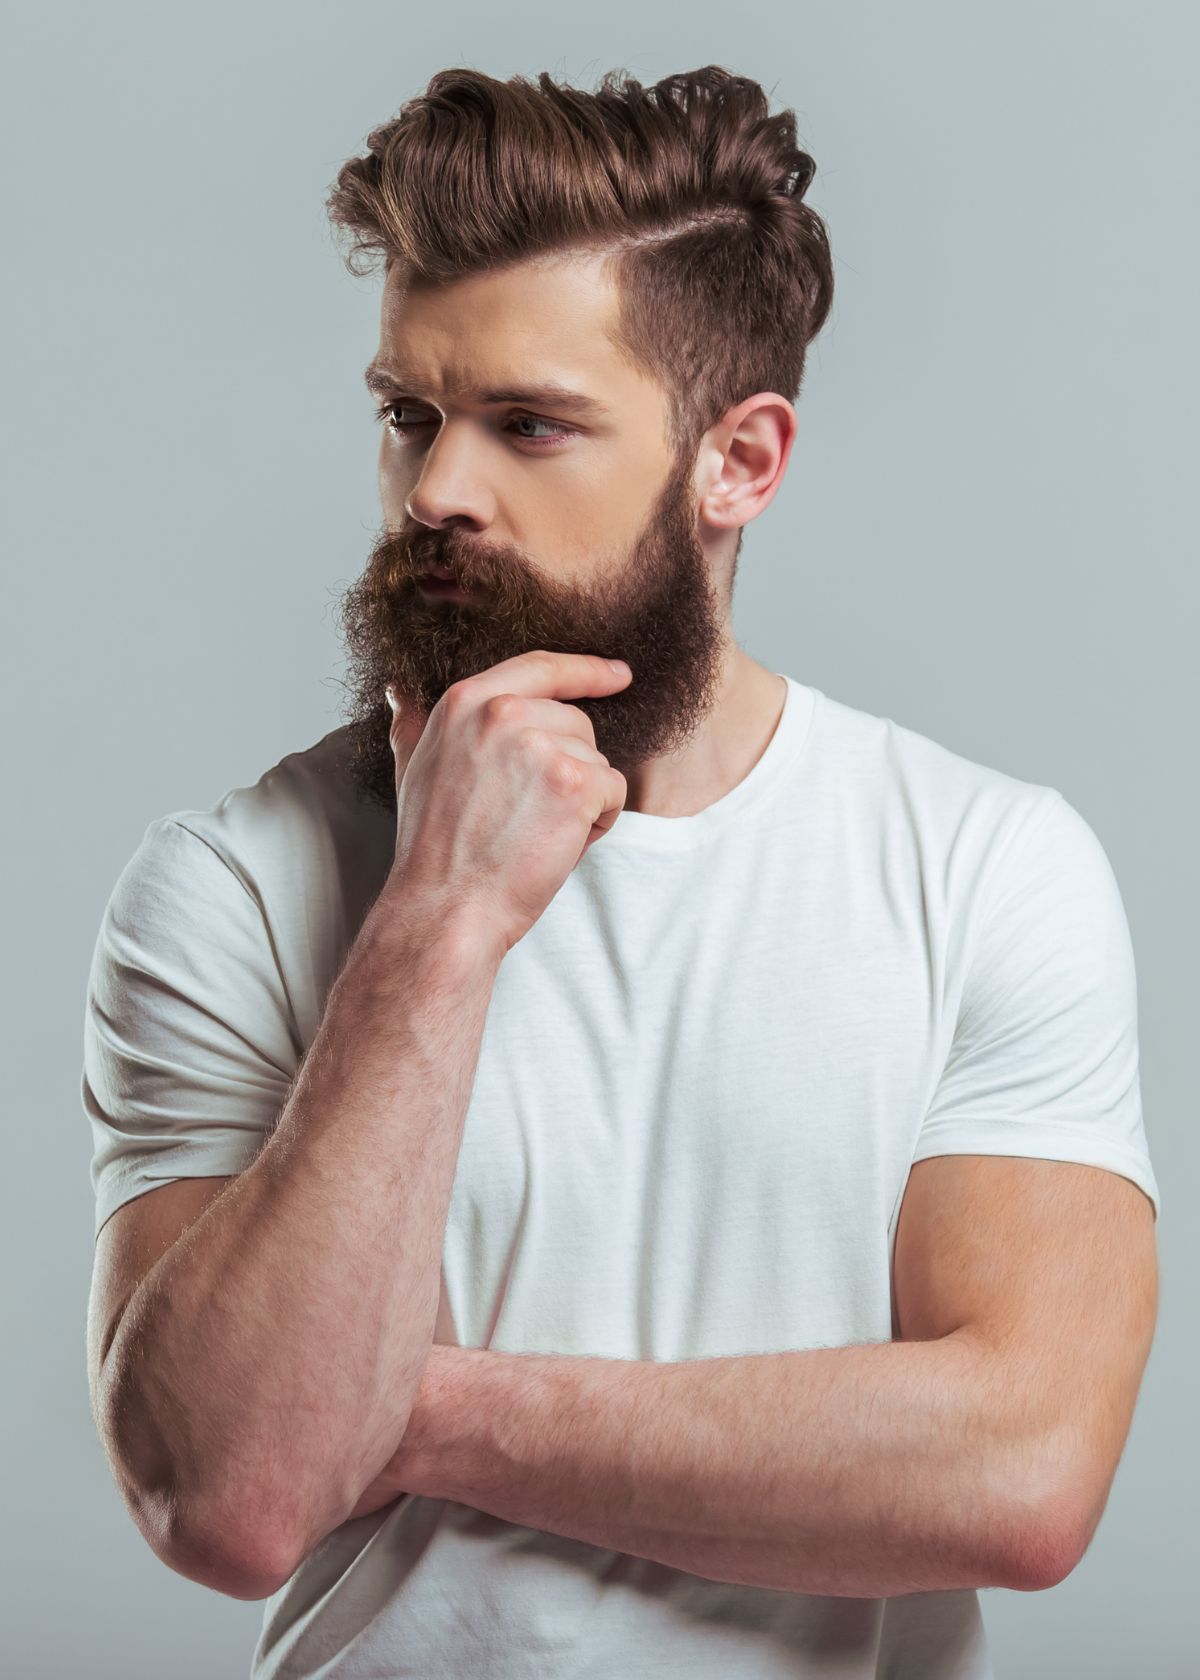 How Often Should I Use a Beard Roller